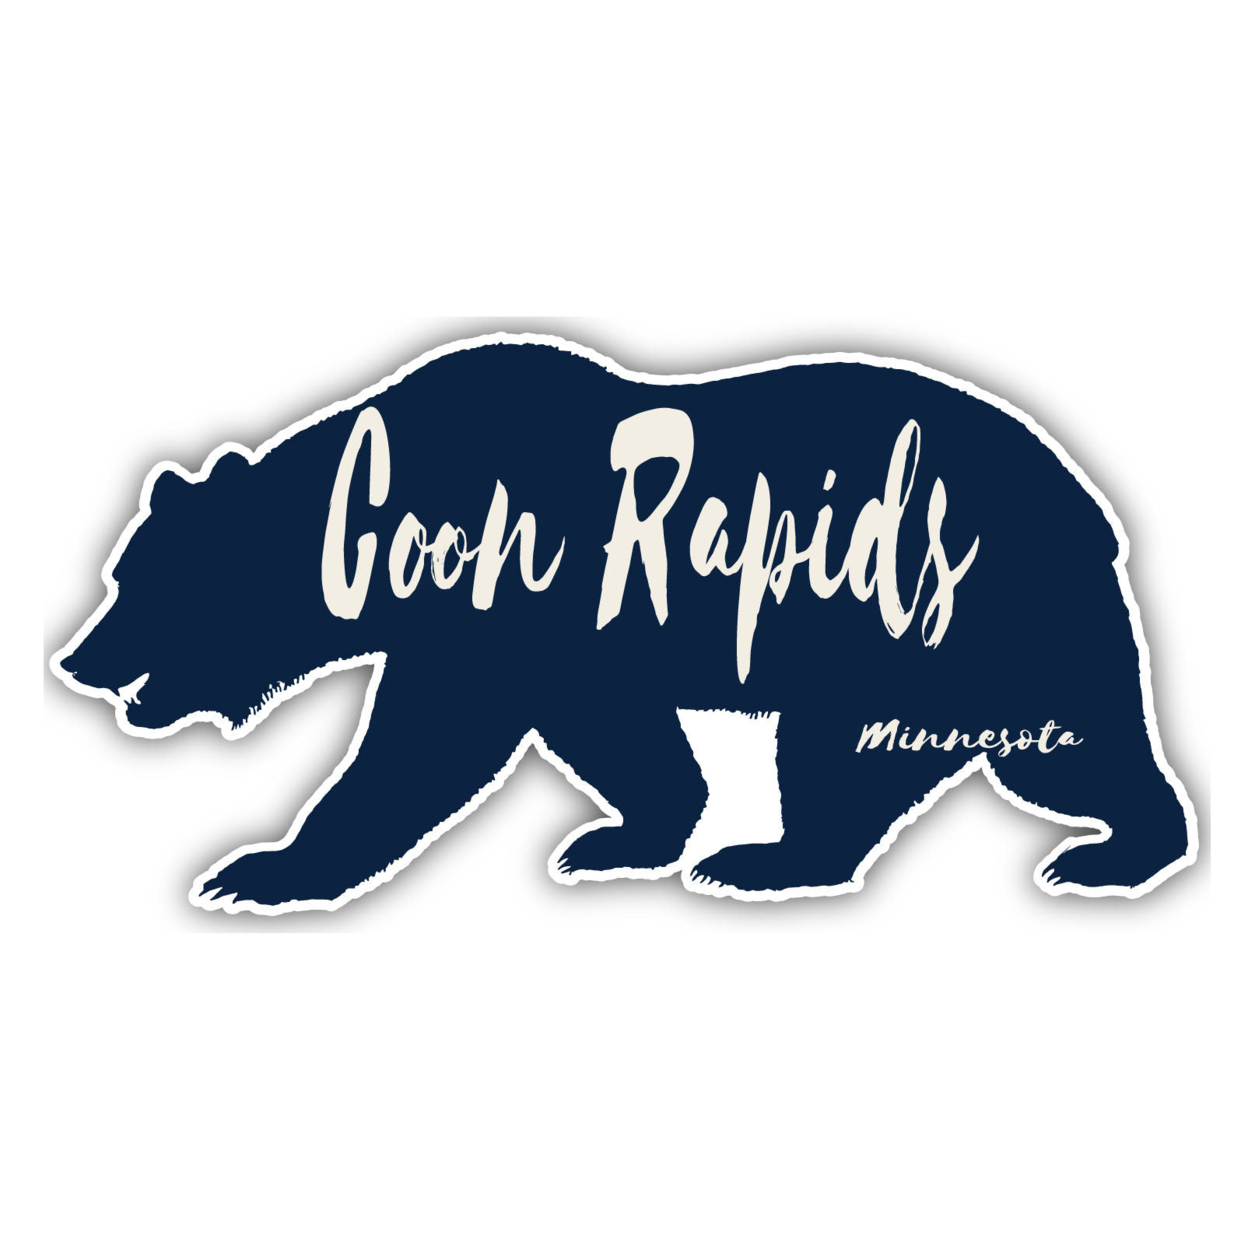 Coon Rapids Minnesota Souvenir Decorative Stickers (Choose Theme And Size) - Single Unit, 8-Inch, Tent